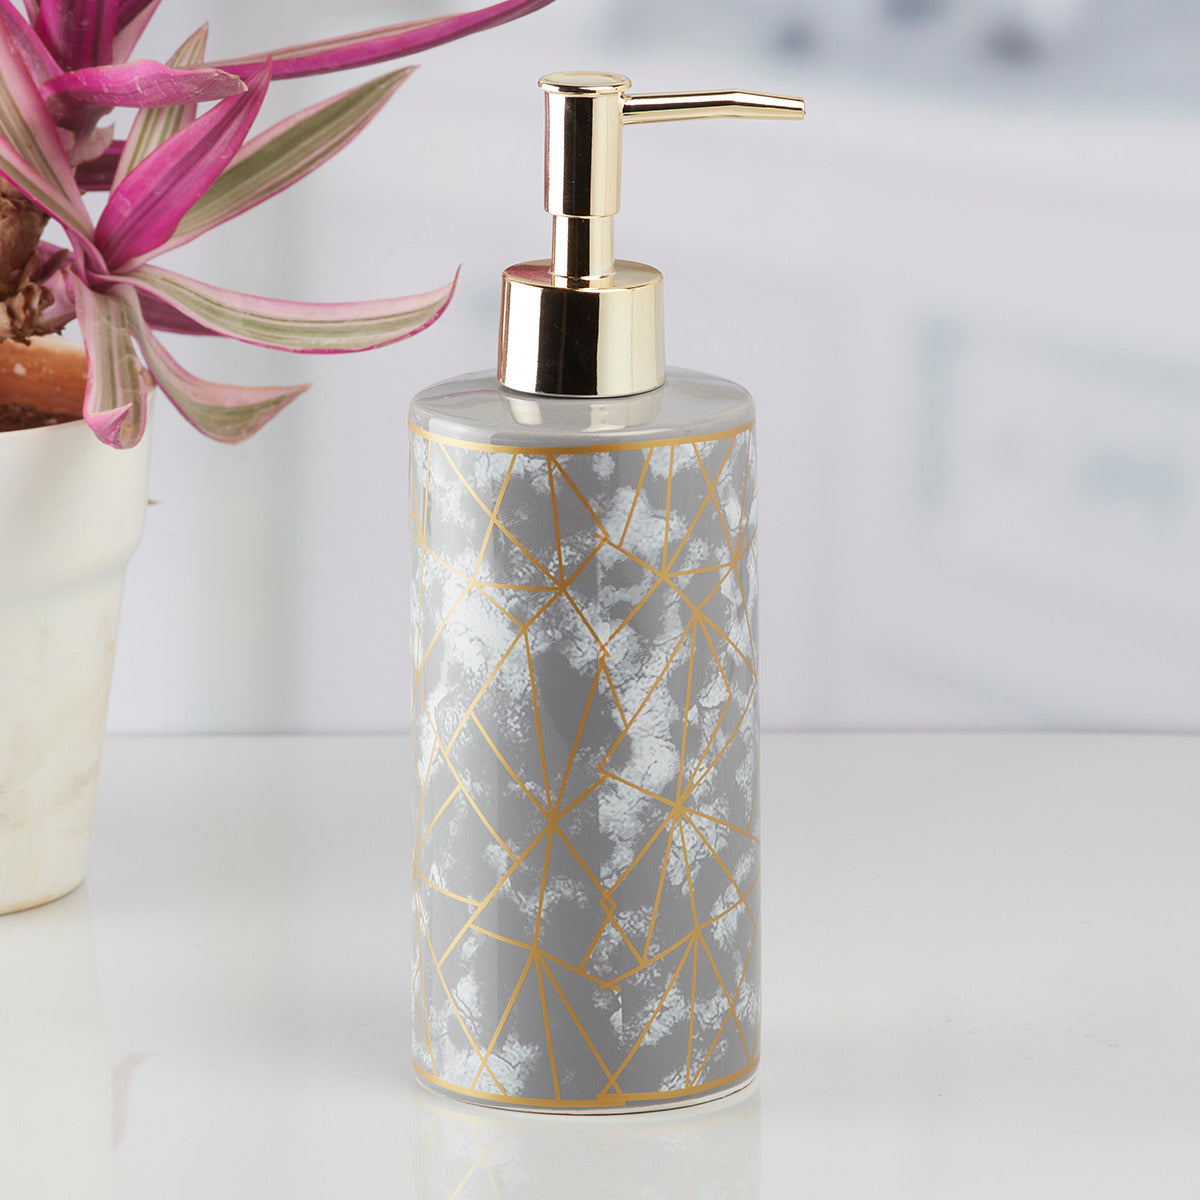 Ceramic Soap Dispenser handwash Pump for Bathroom, Set of 1, Black/Gold (10210)